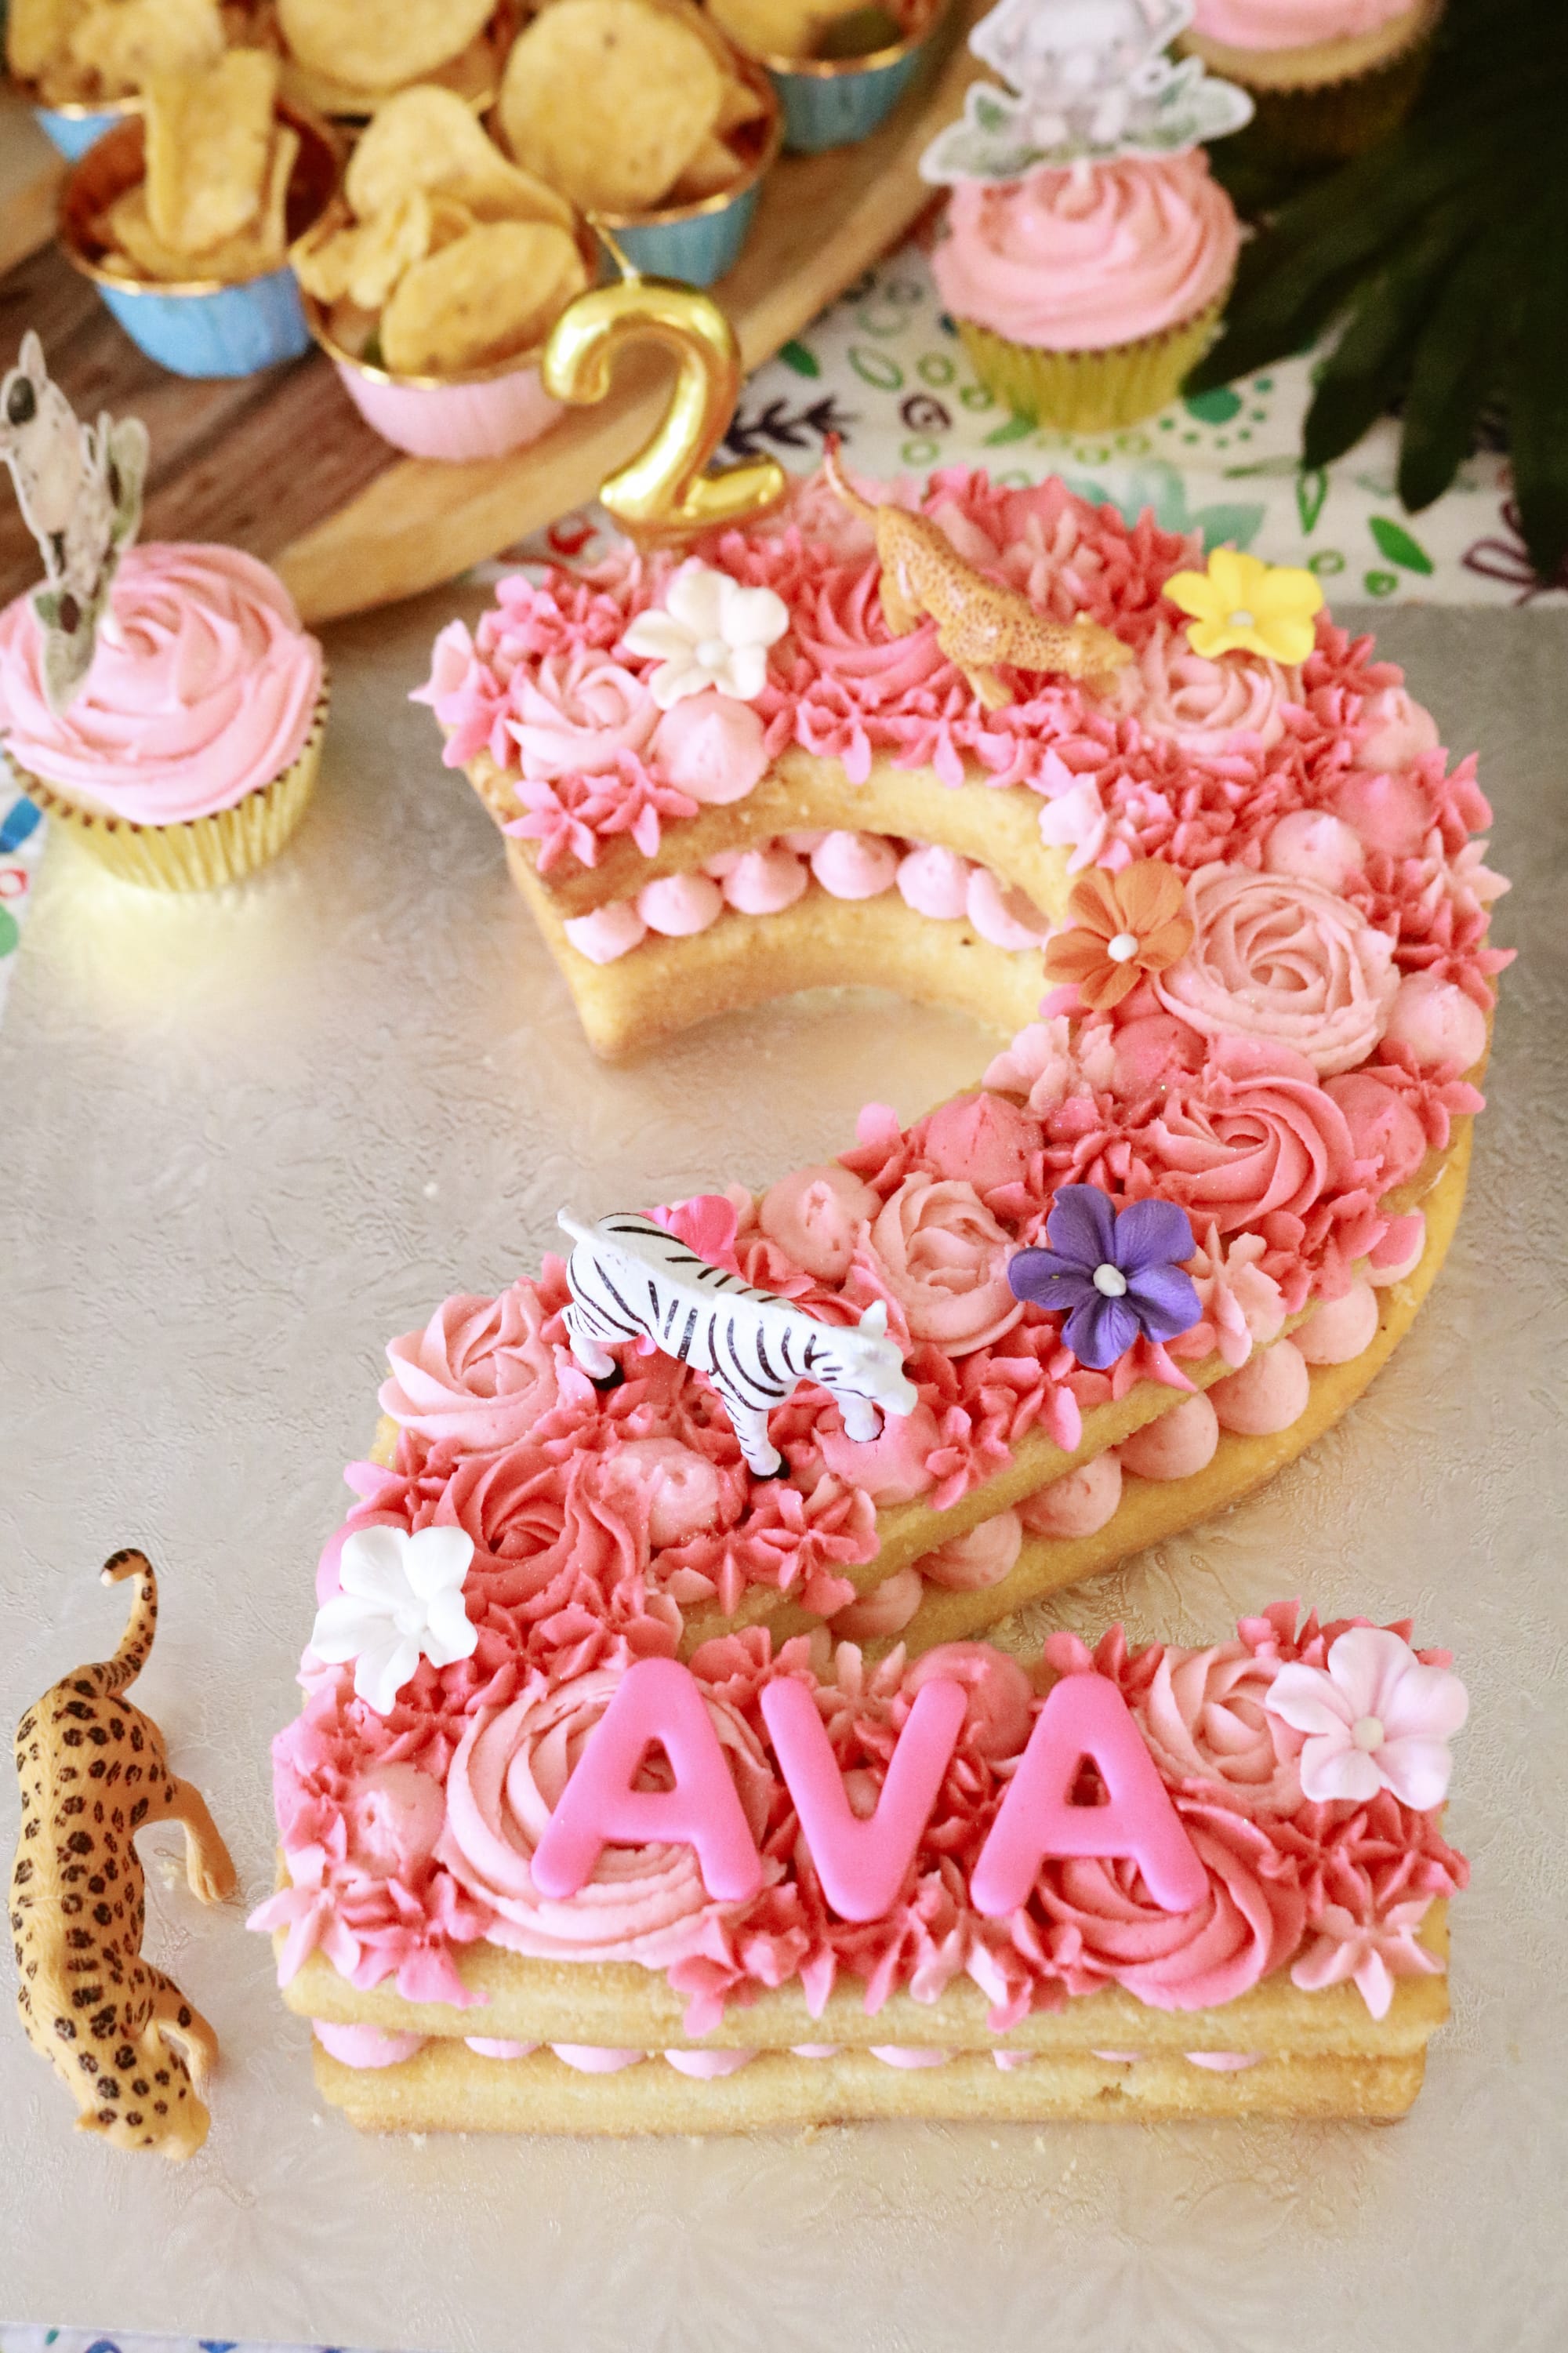 Celebrating Ava-Maree's 2nd Birthday: A Wild Journey!